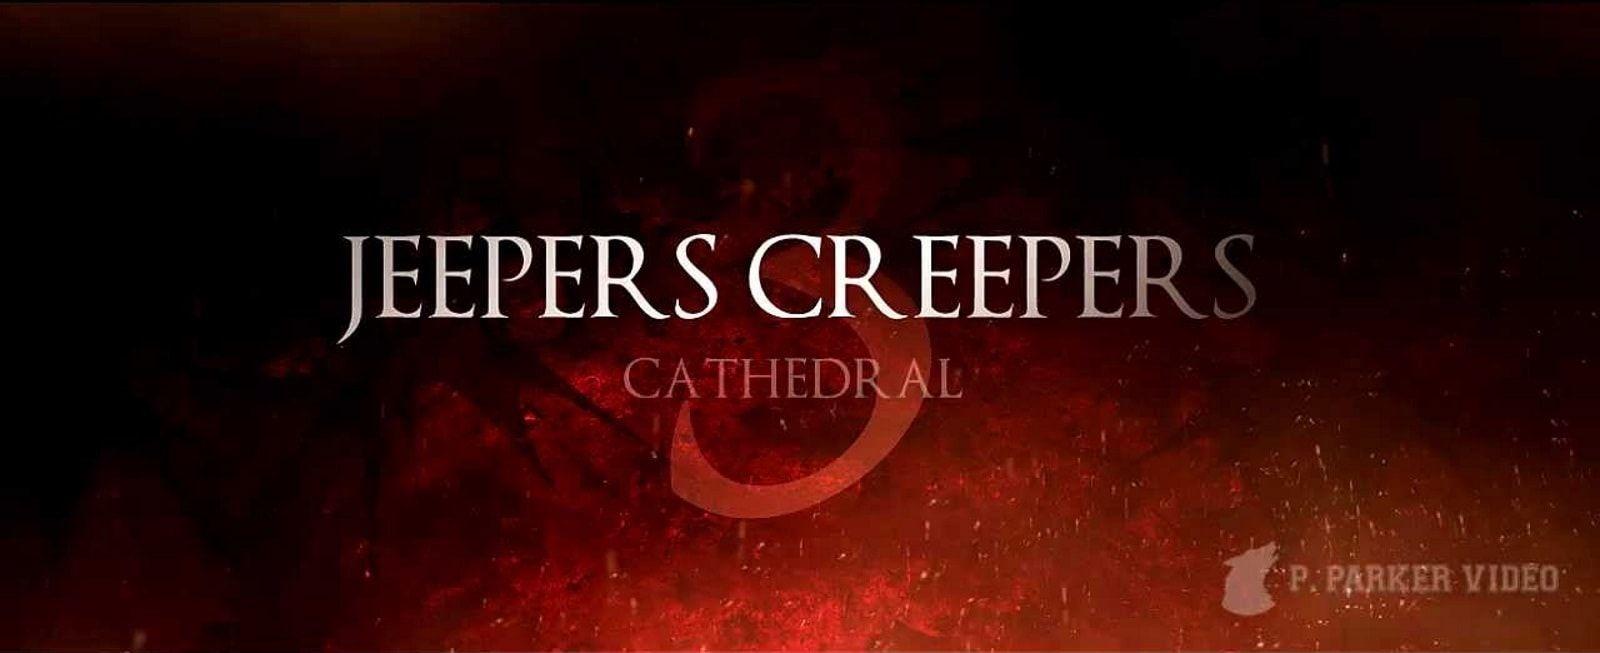 Jeepers Creepers 3: Cathedral HD Desktop Wallpaperwallpaper.net